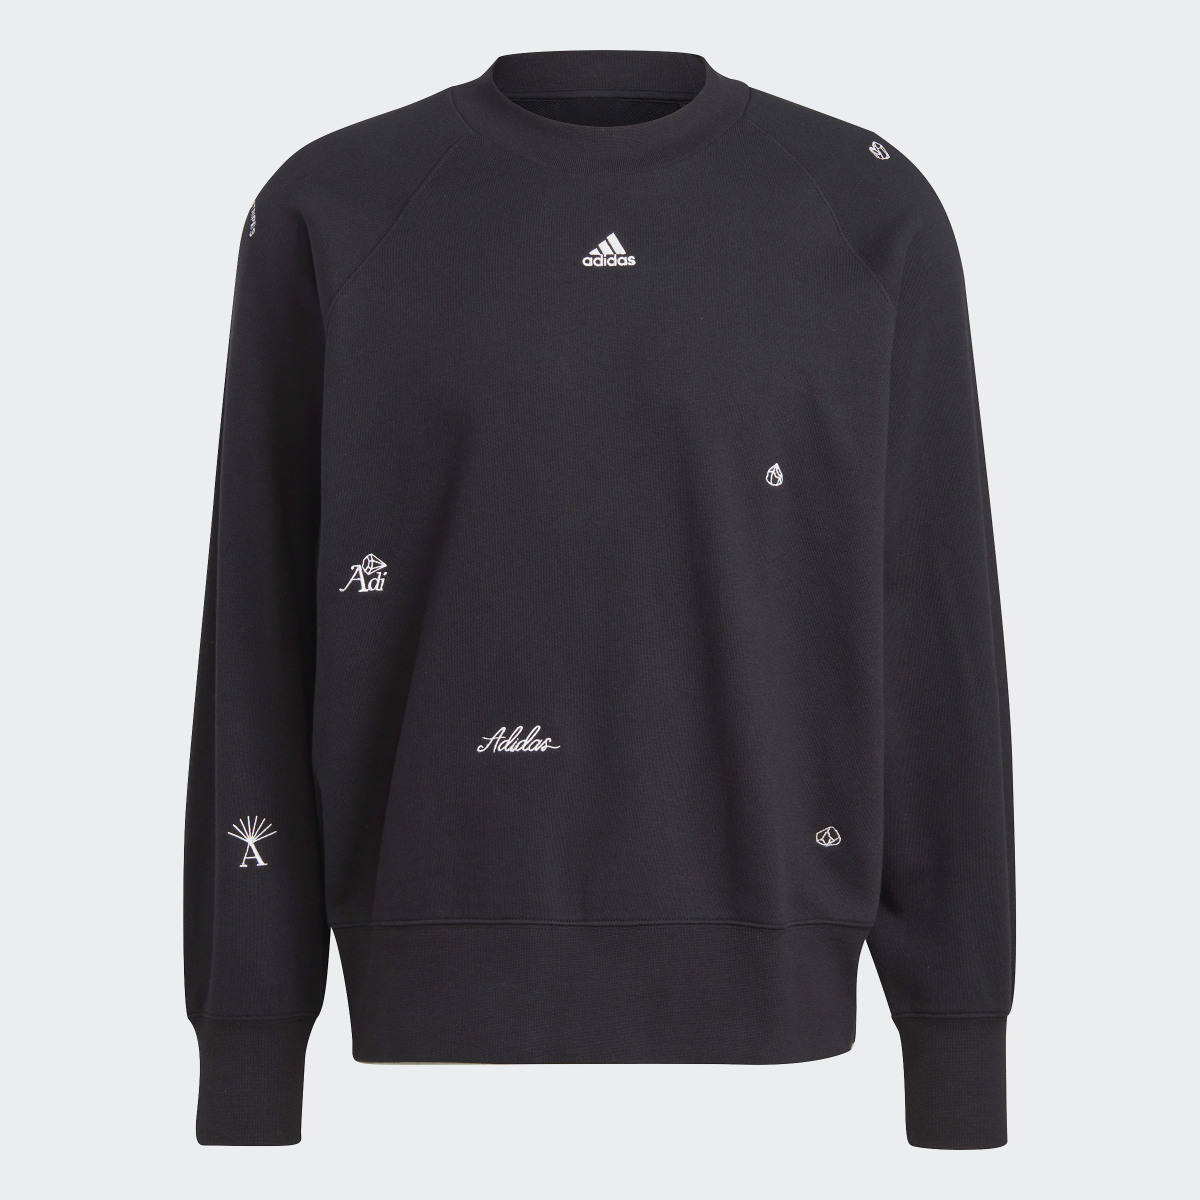 Adidas Oversized Crewneck Sweatshirt with Healing Crystal-Inspired Graphics. 5